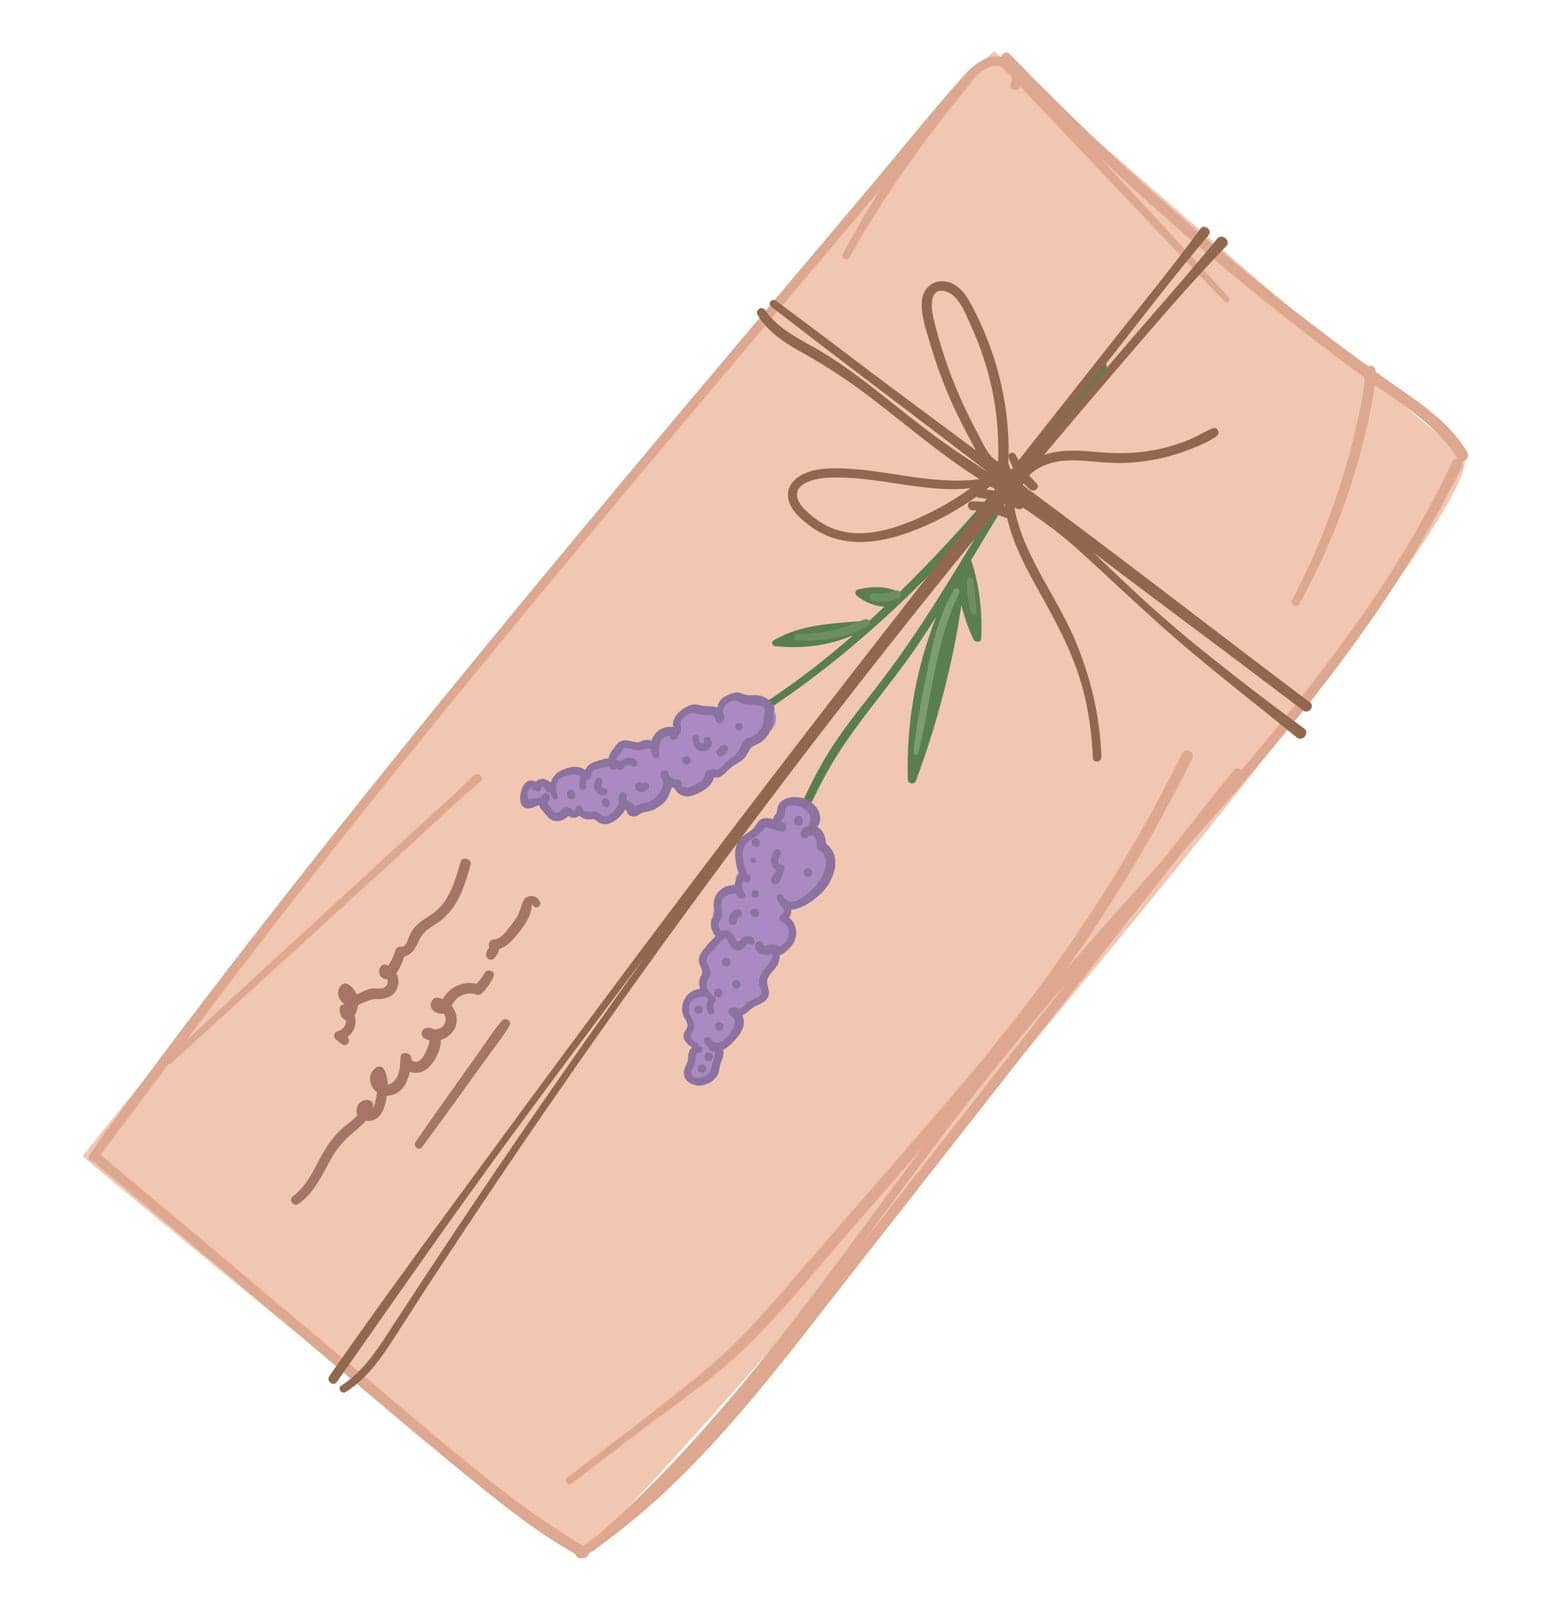 Decorative letter with lavender floral branch by Sonulkaster